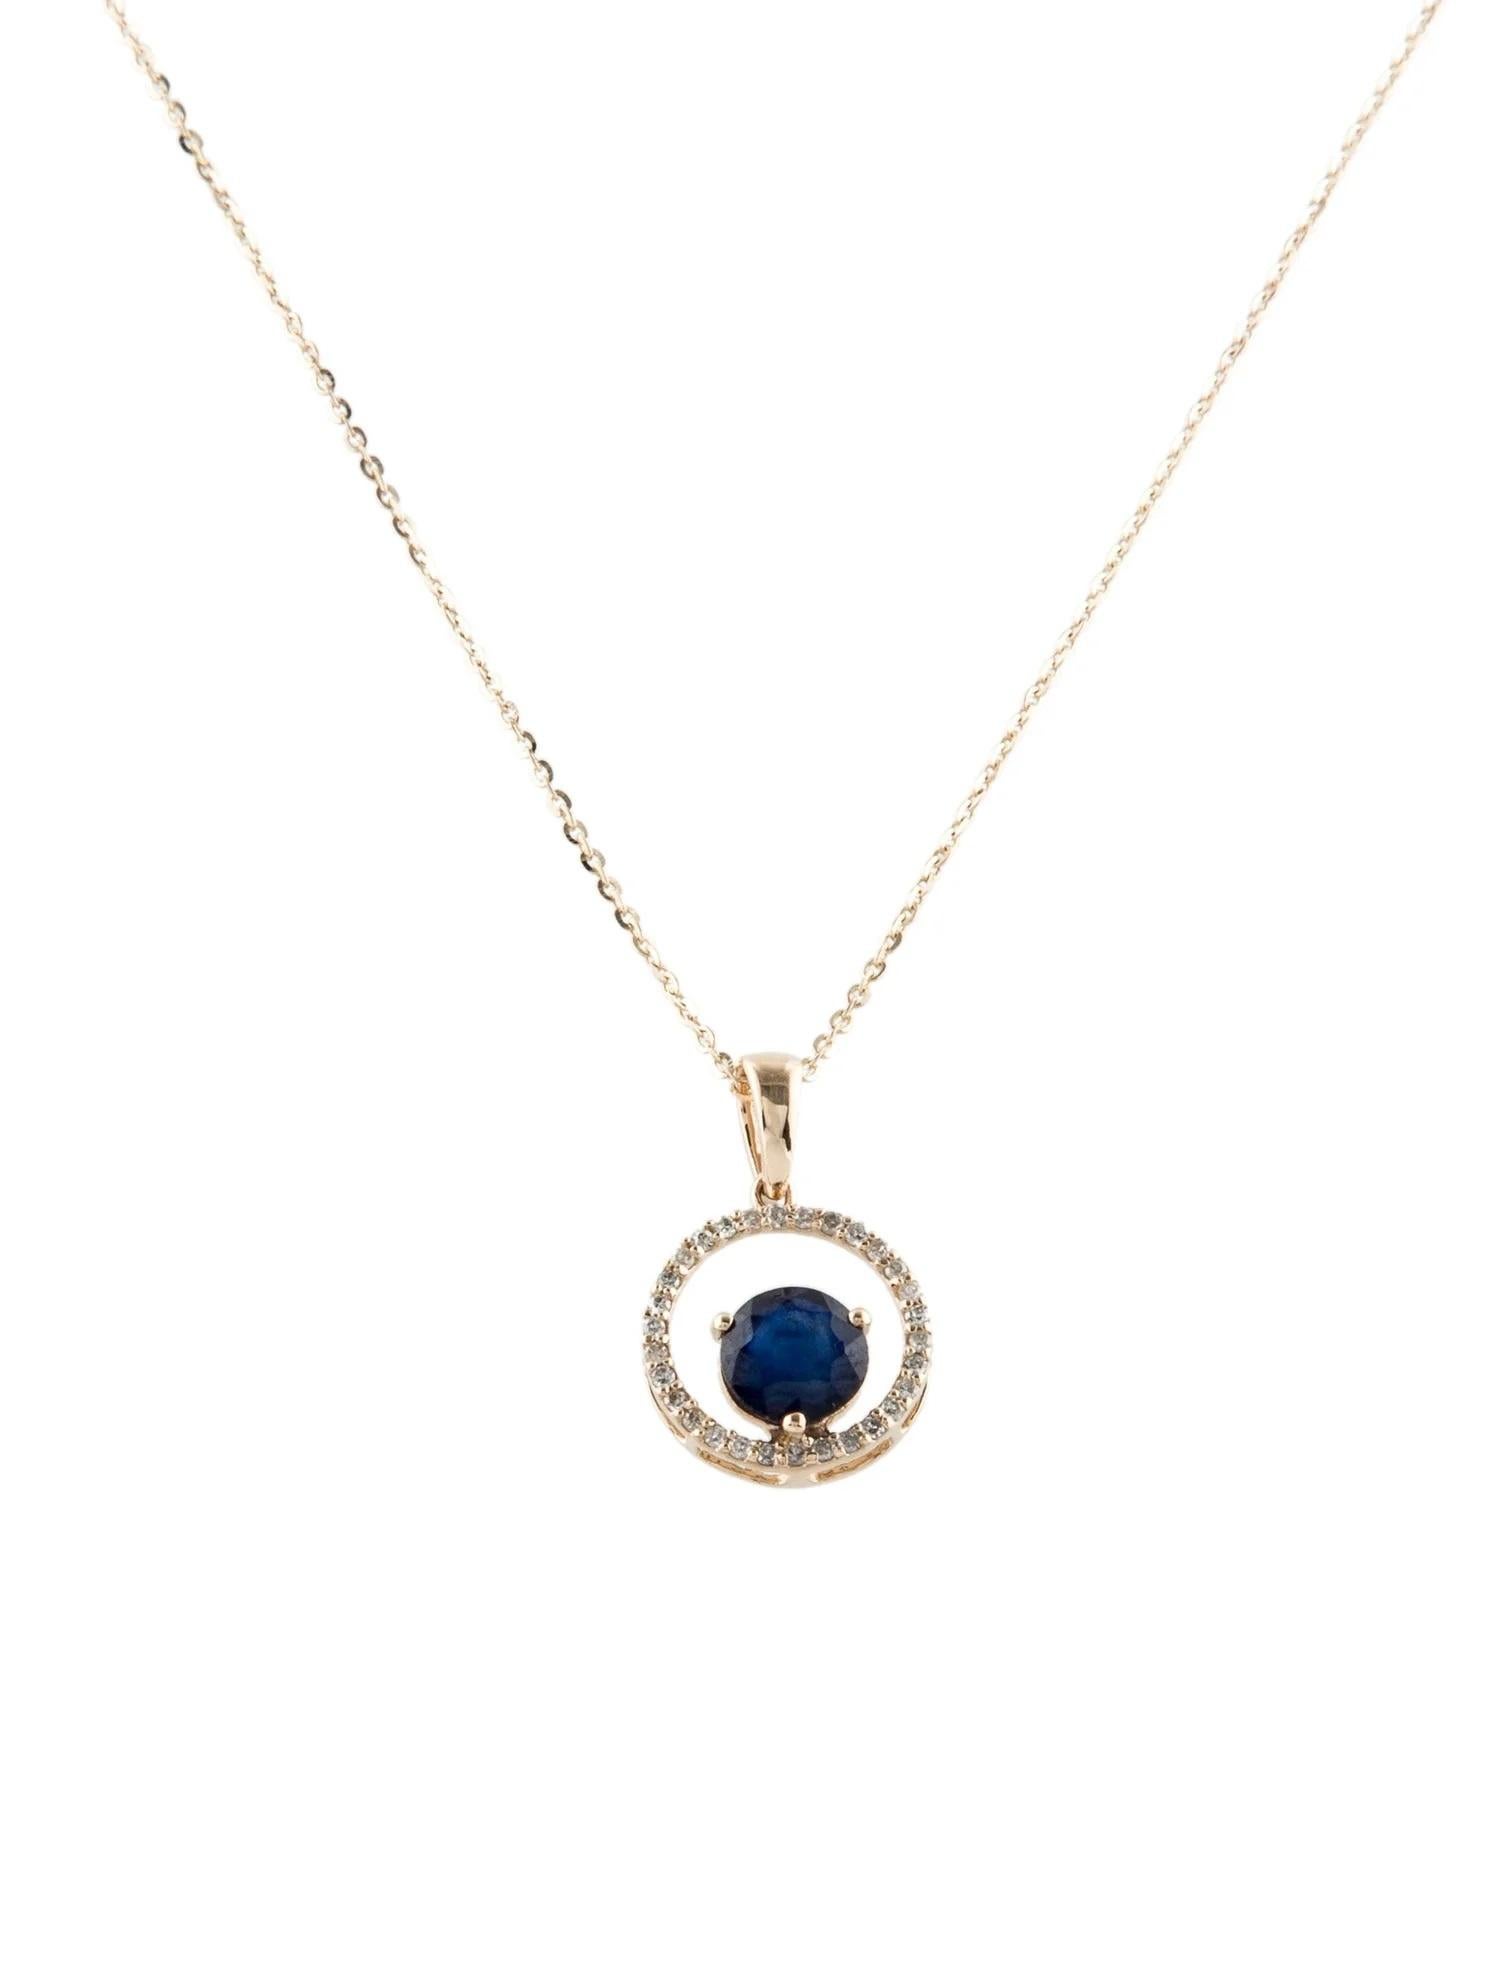 Round Cut 14K Sapphire & Diamond Pendant Necklace - 0.72 Carat Round Faceted Sapphire For Sale